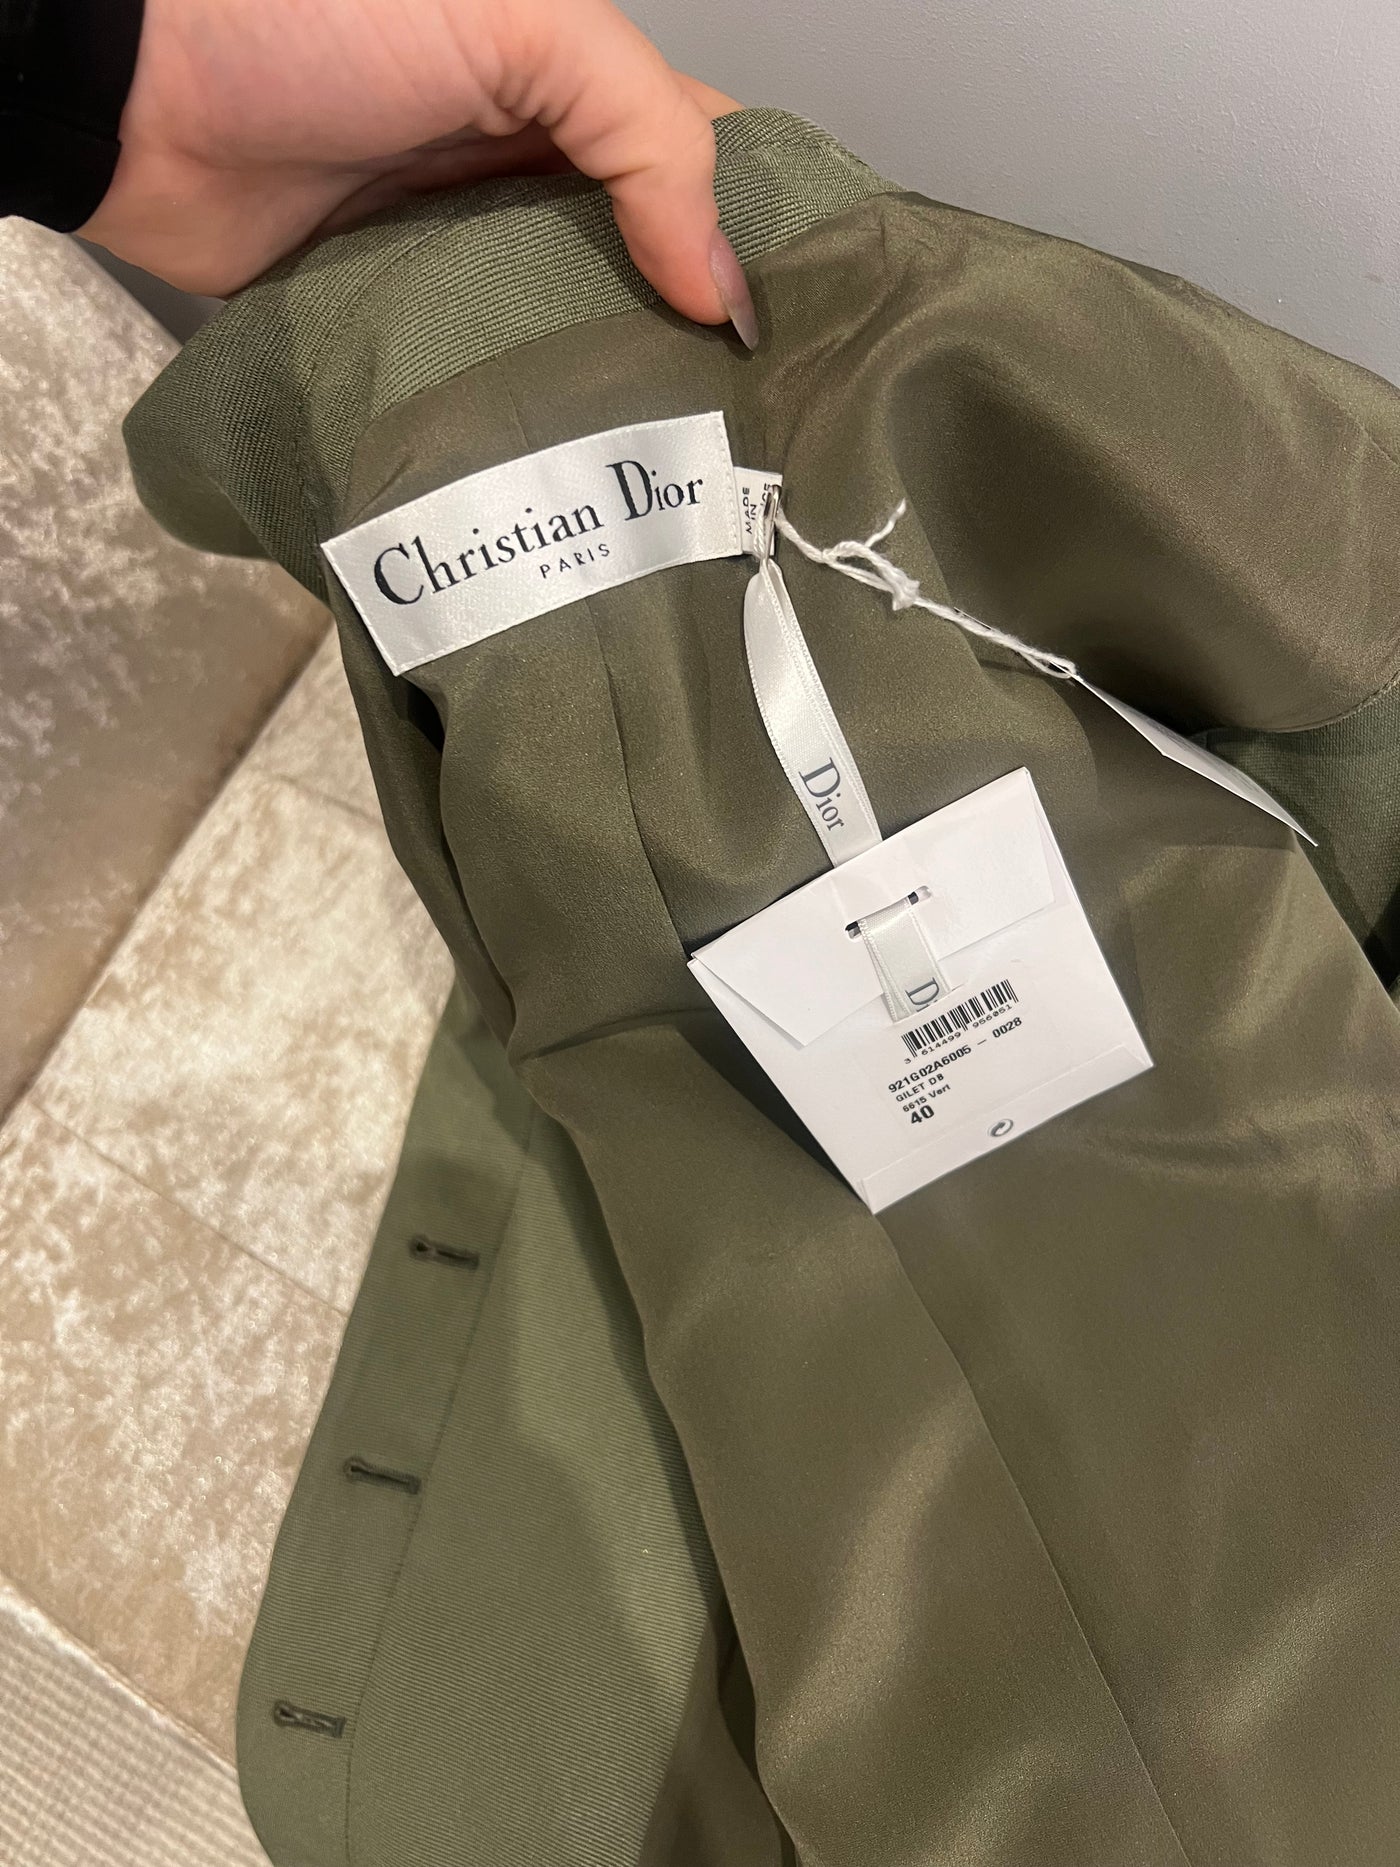 Brand new Christian Dior runway 2019 gilet size 40